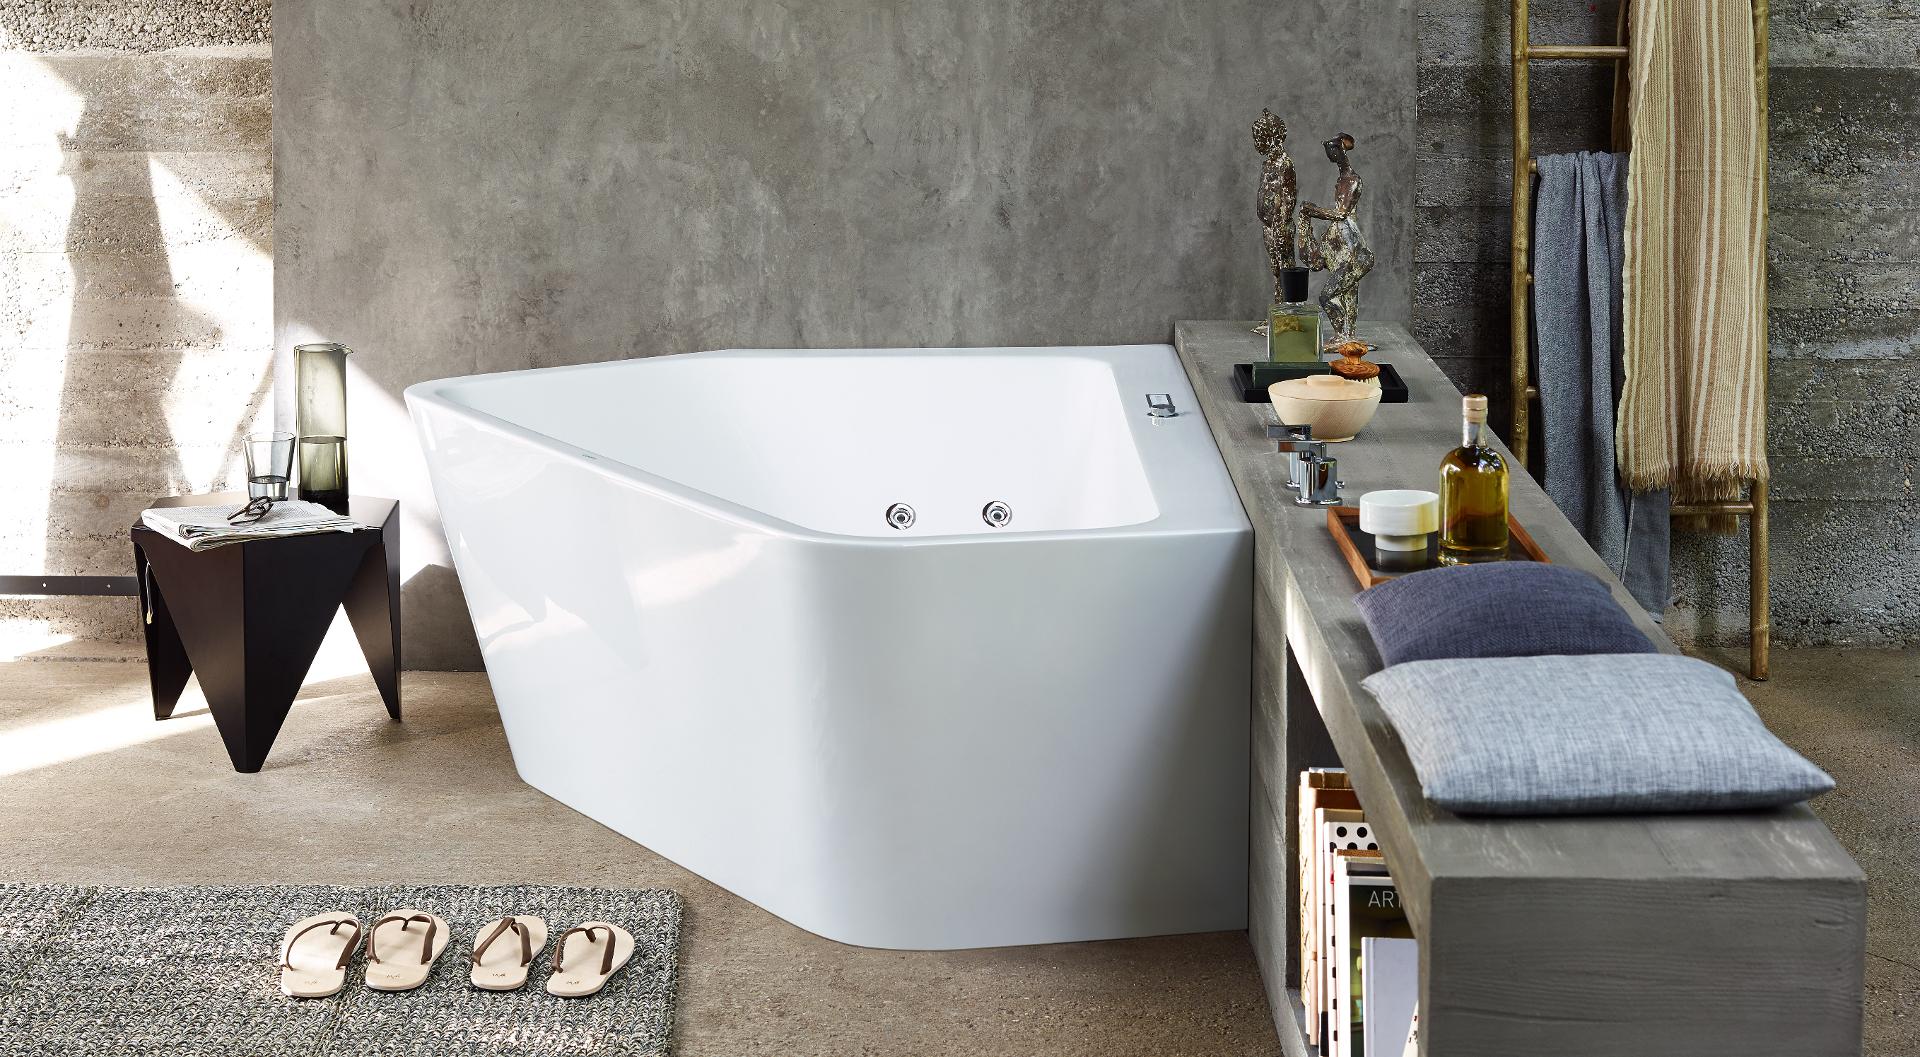 Paiova 5 acrylic bathtub
